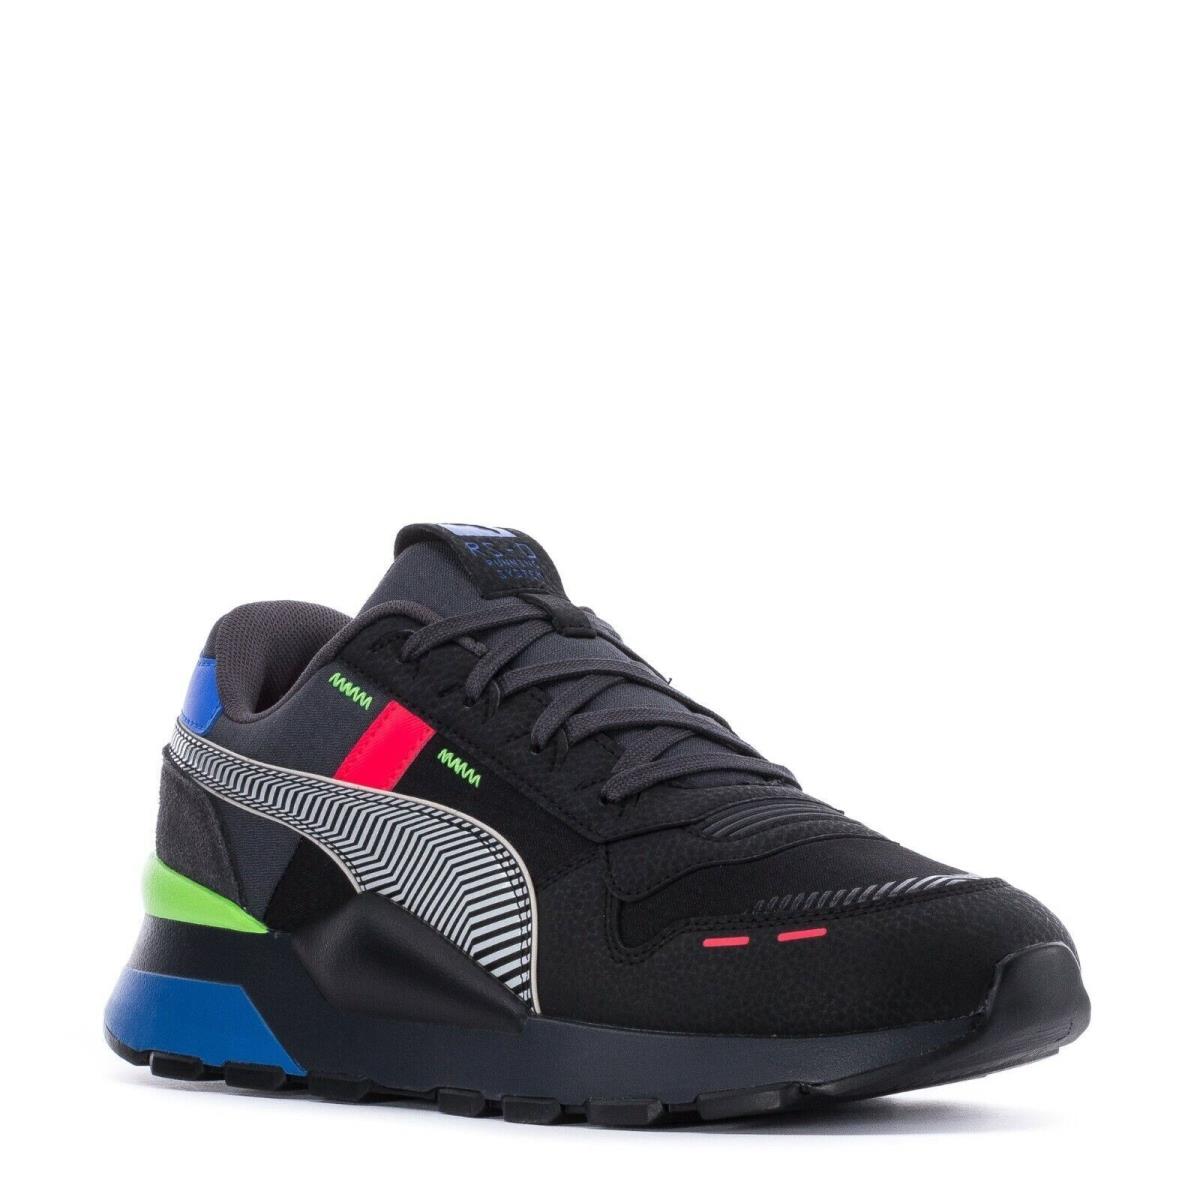 Puma shoes DAZED - Black/Red/Blue 2